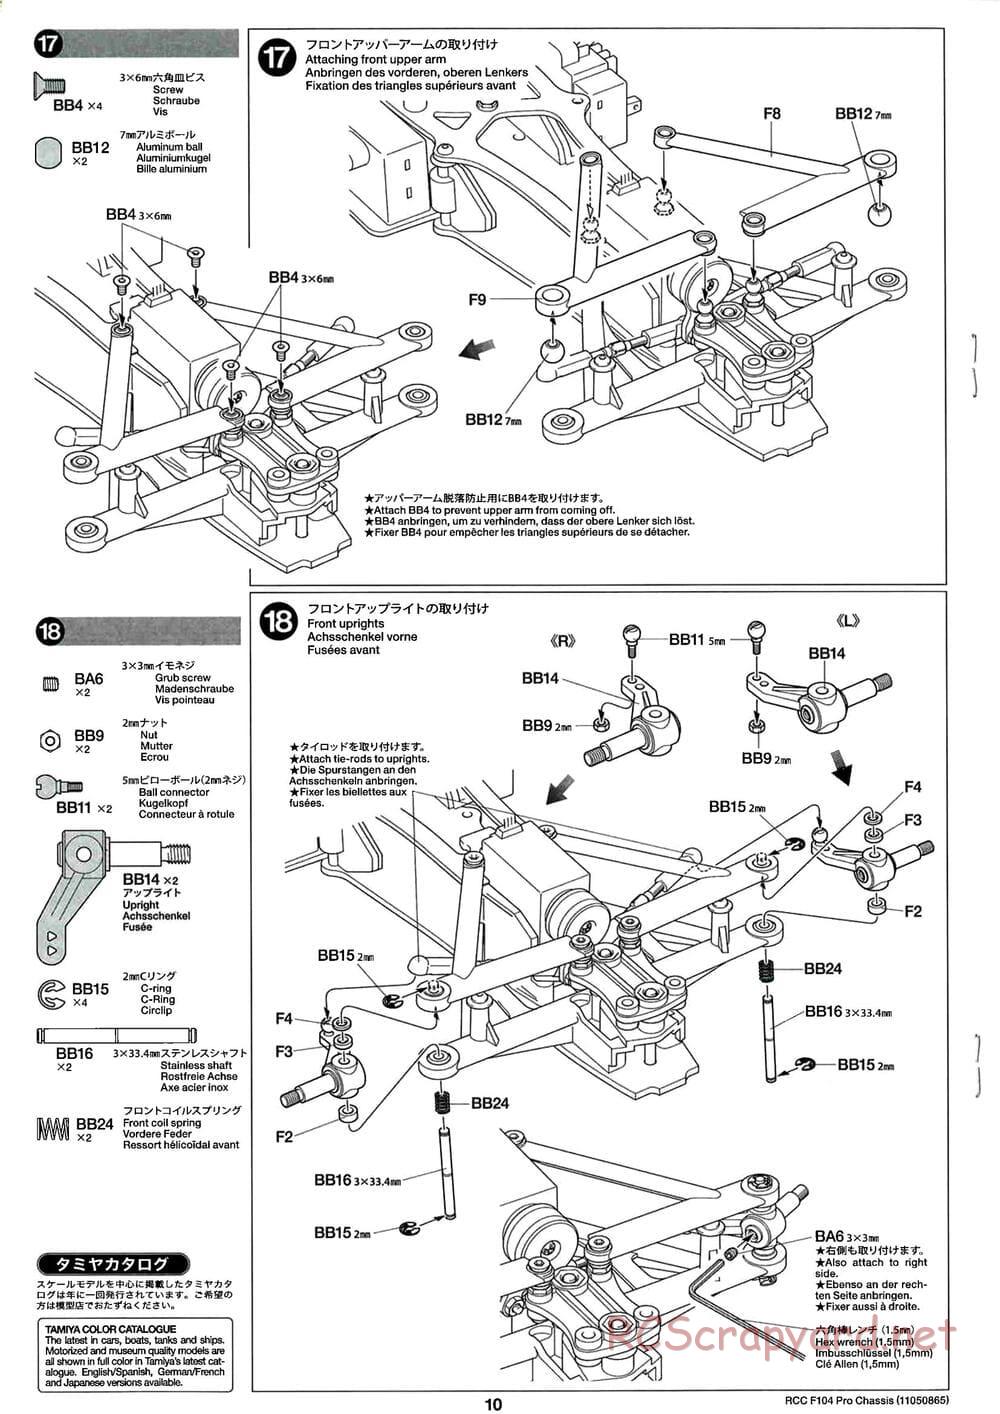 Tamiya - F104 Pro Chassis - Manual - Page 10